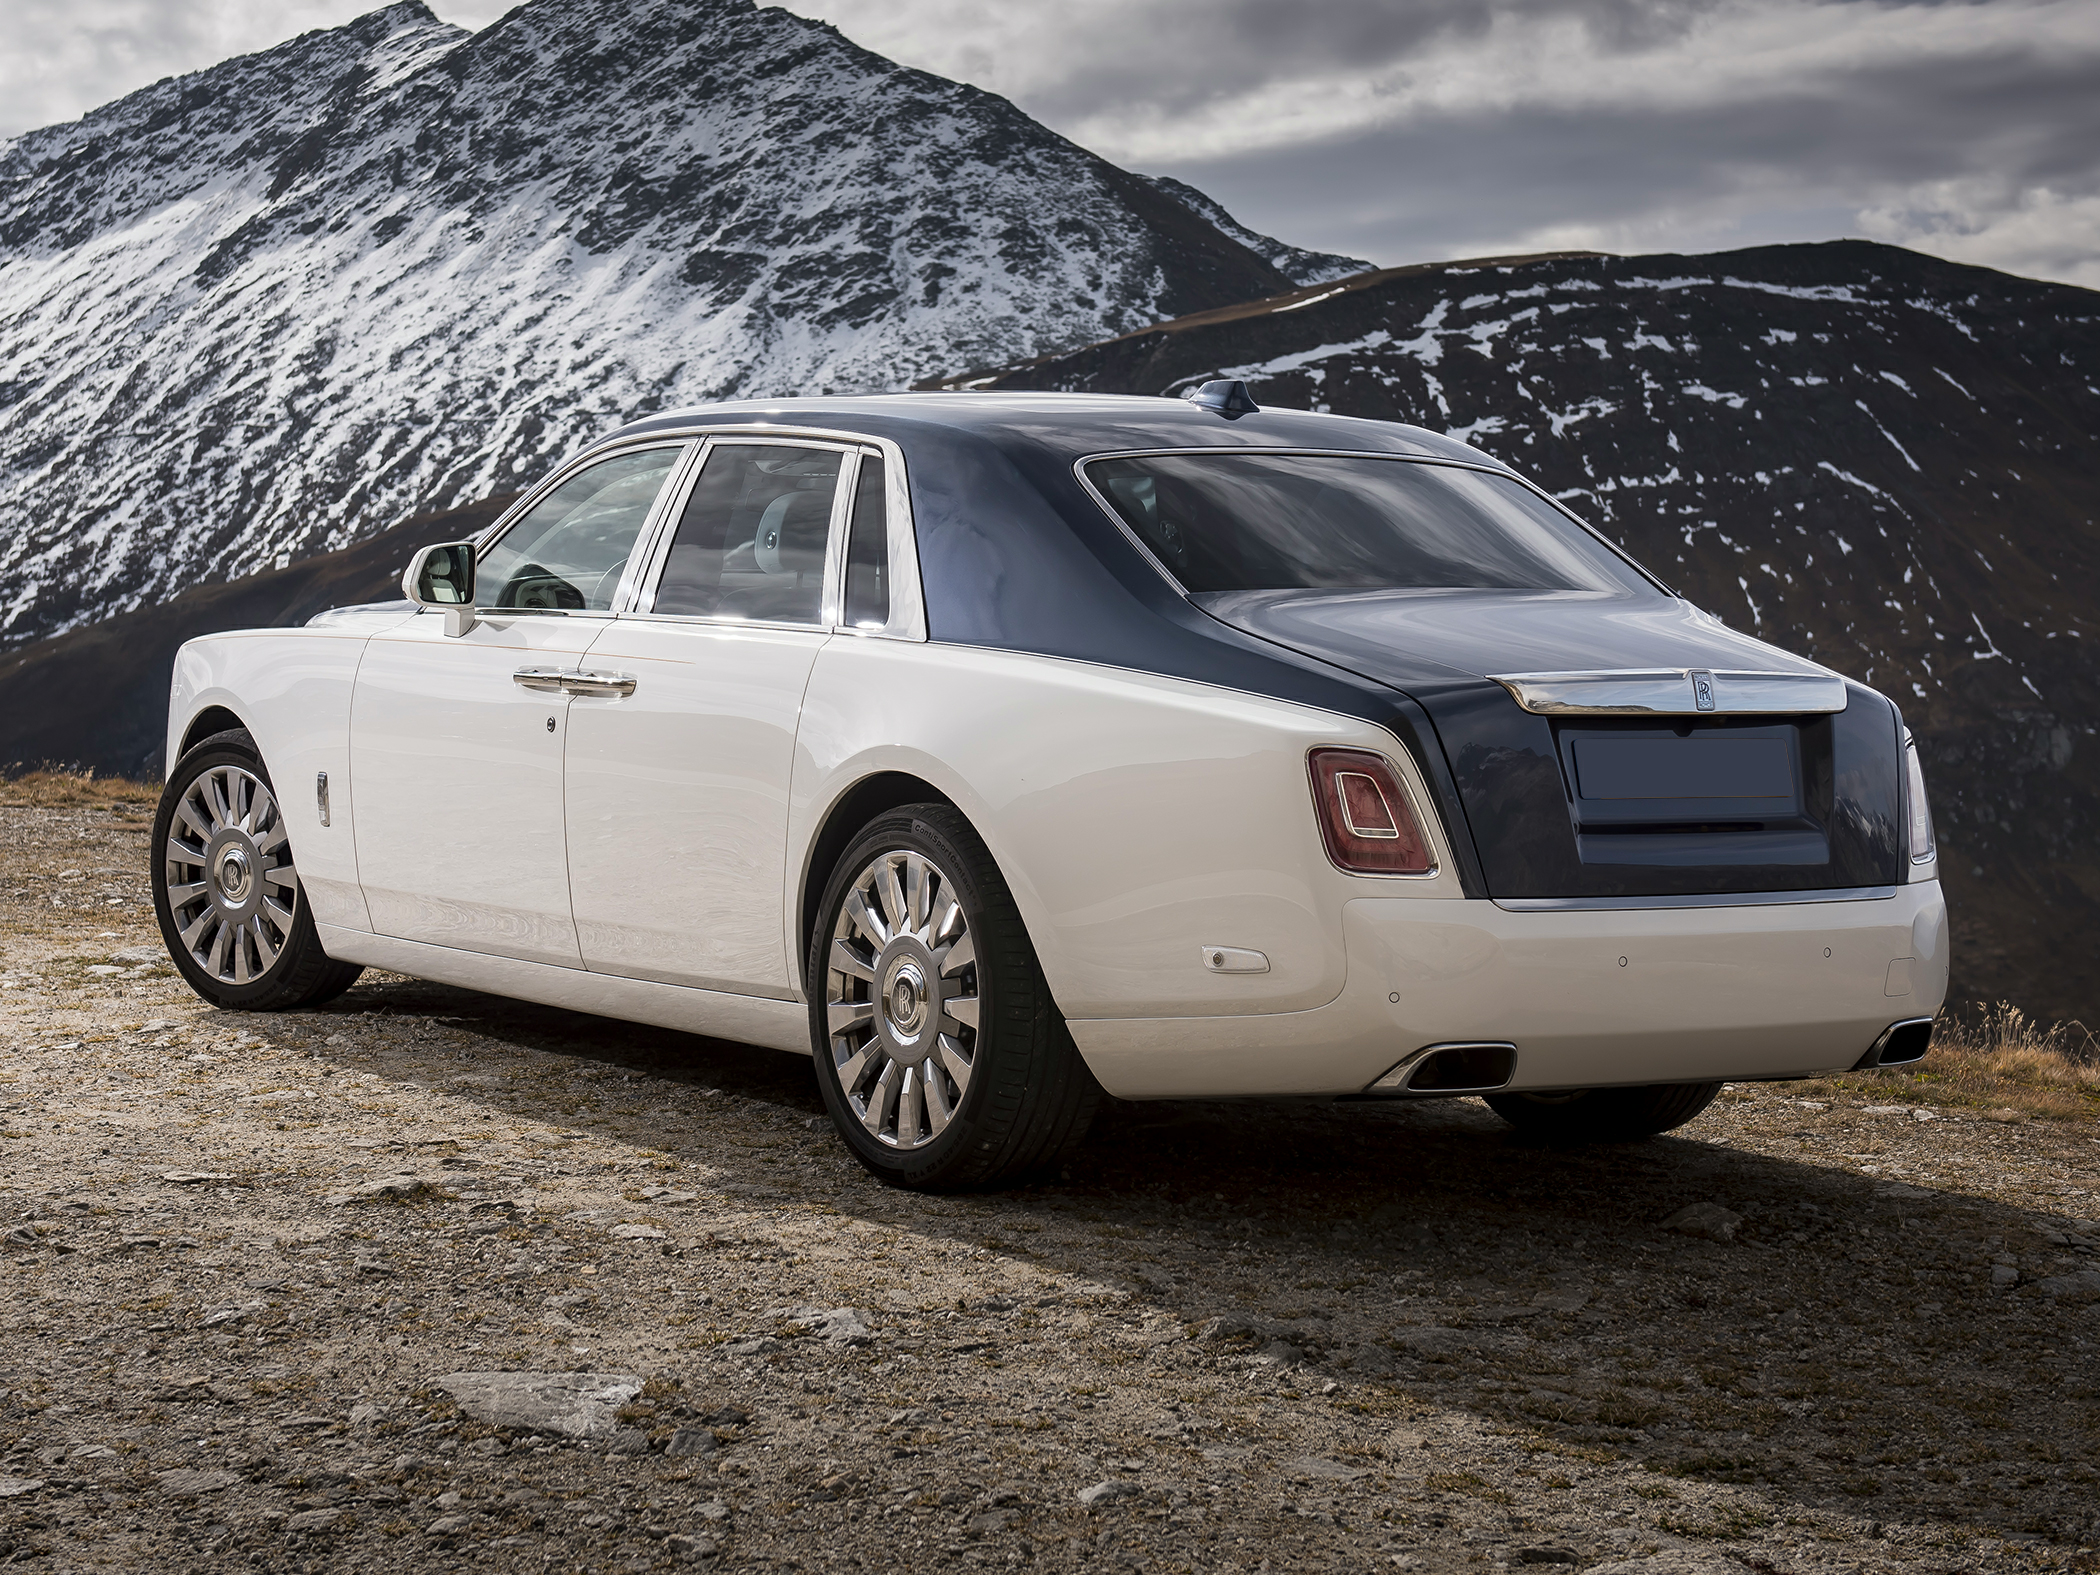 2020 Rolls-Royce Phantom